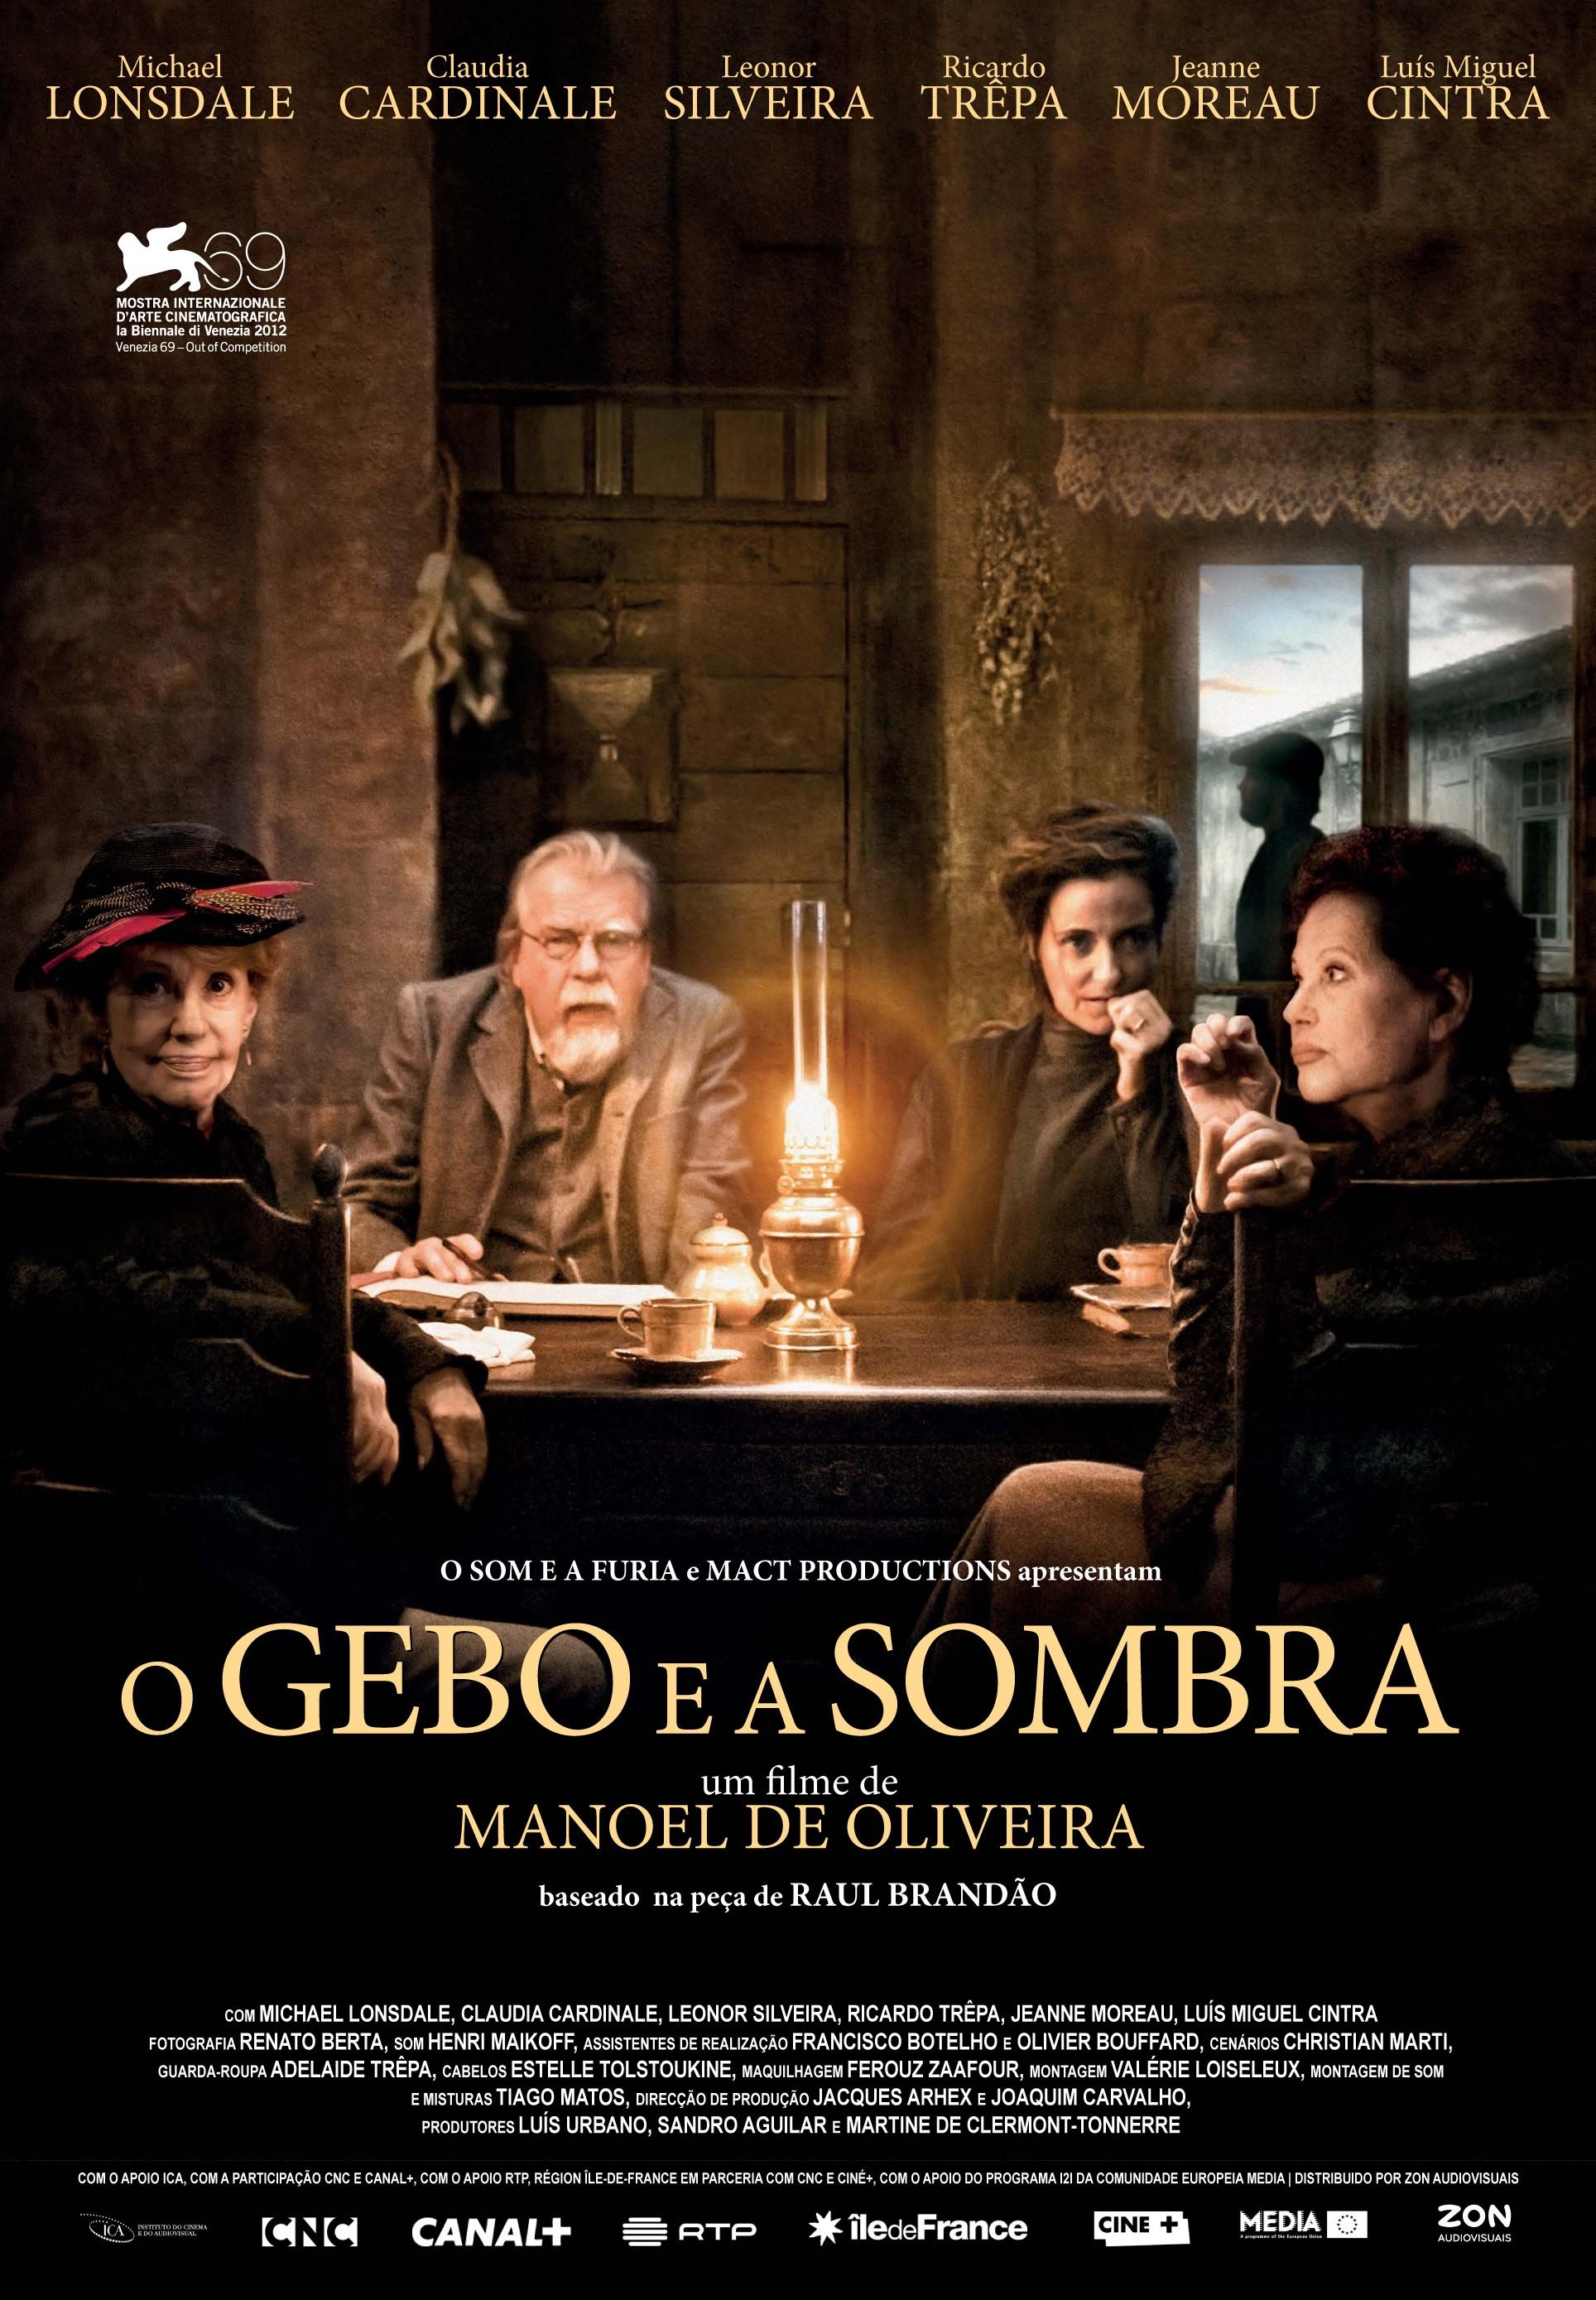 Постер фильма Гебо и тени | Gebo et l'ombre